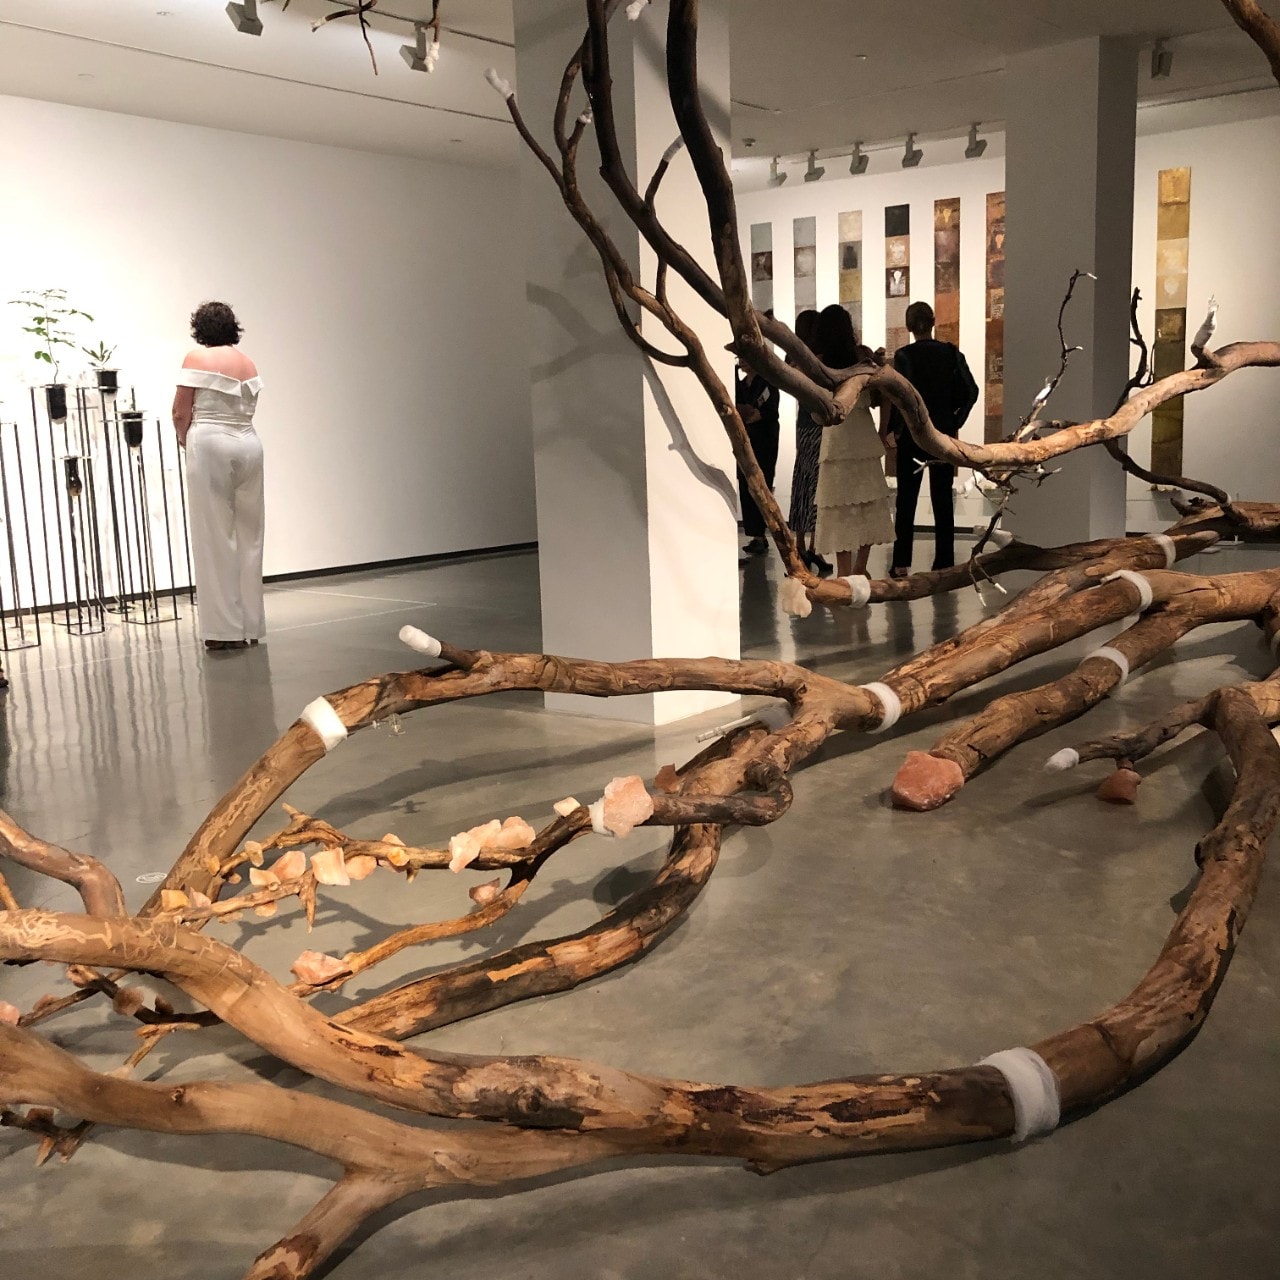 photo of an art work called Heart Shock, it is large dead tree lying on its side in an art gallery